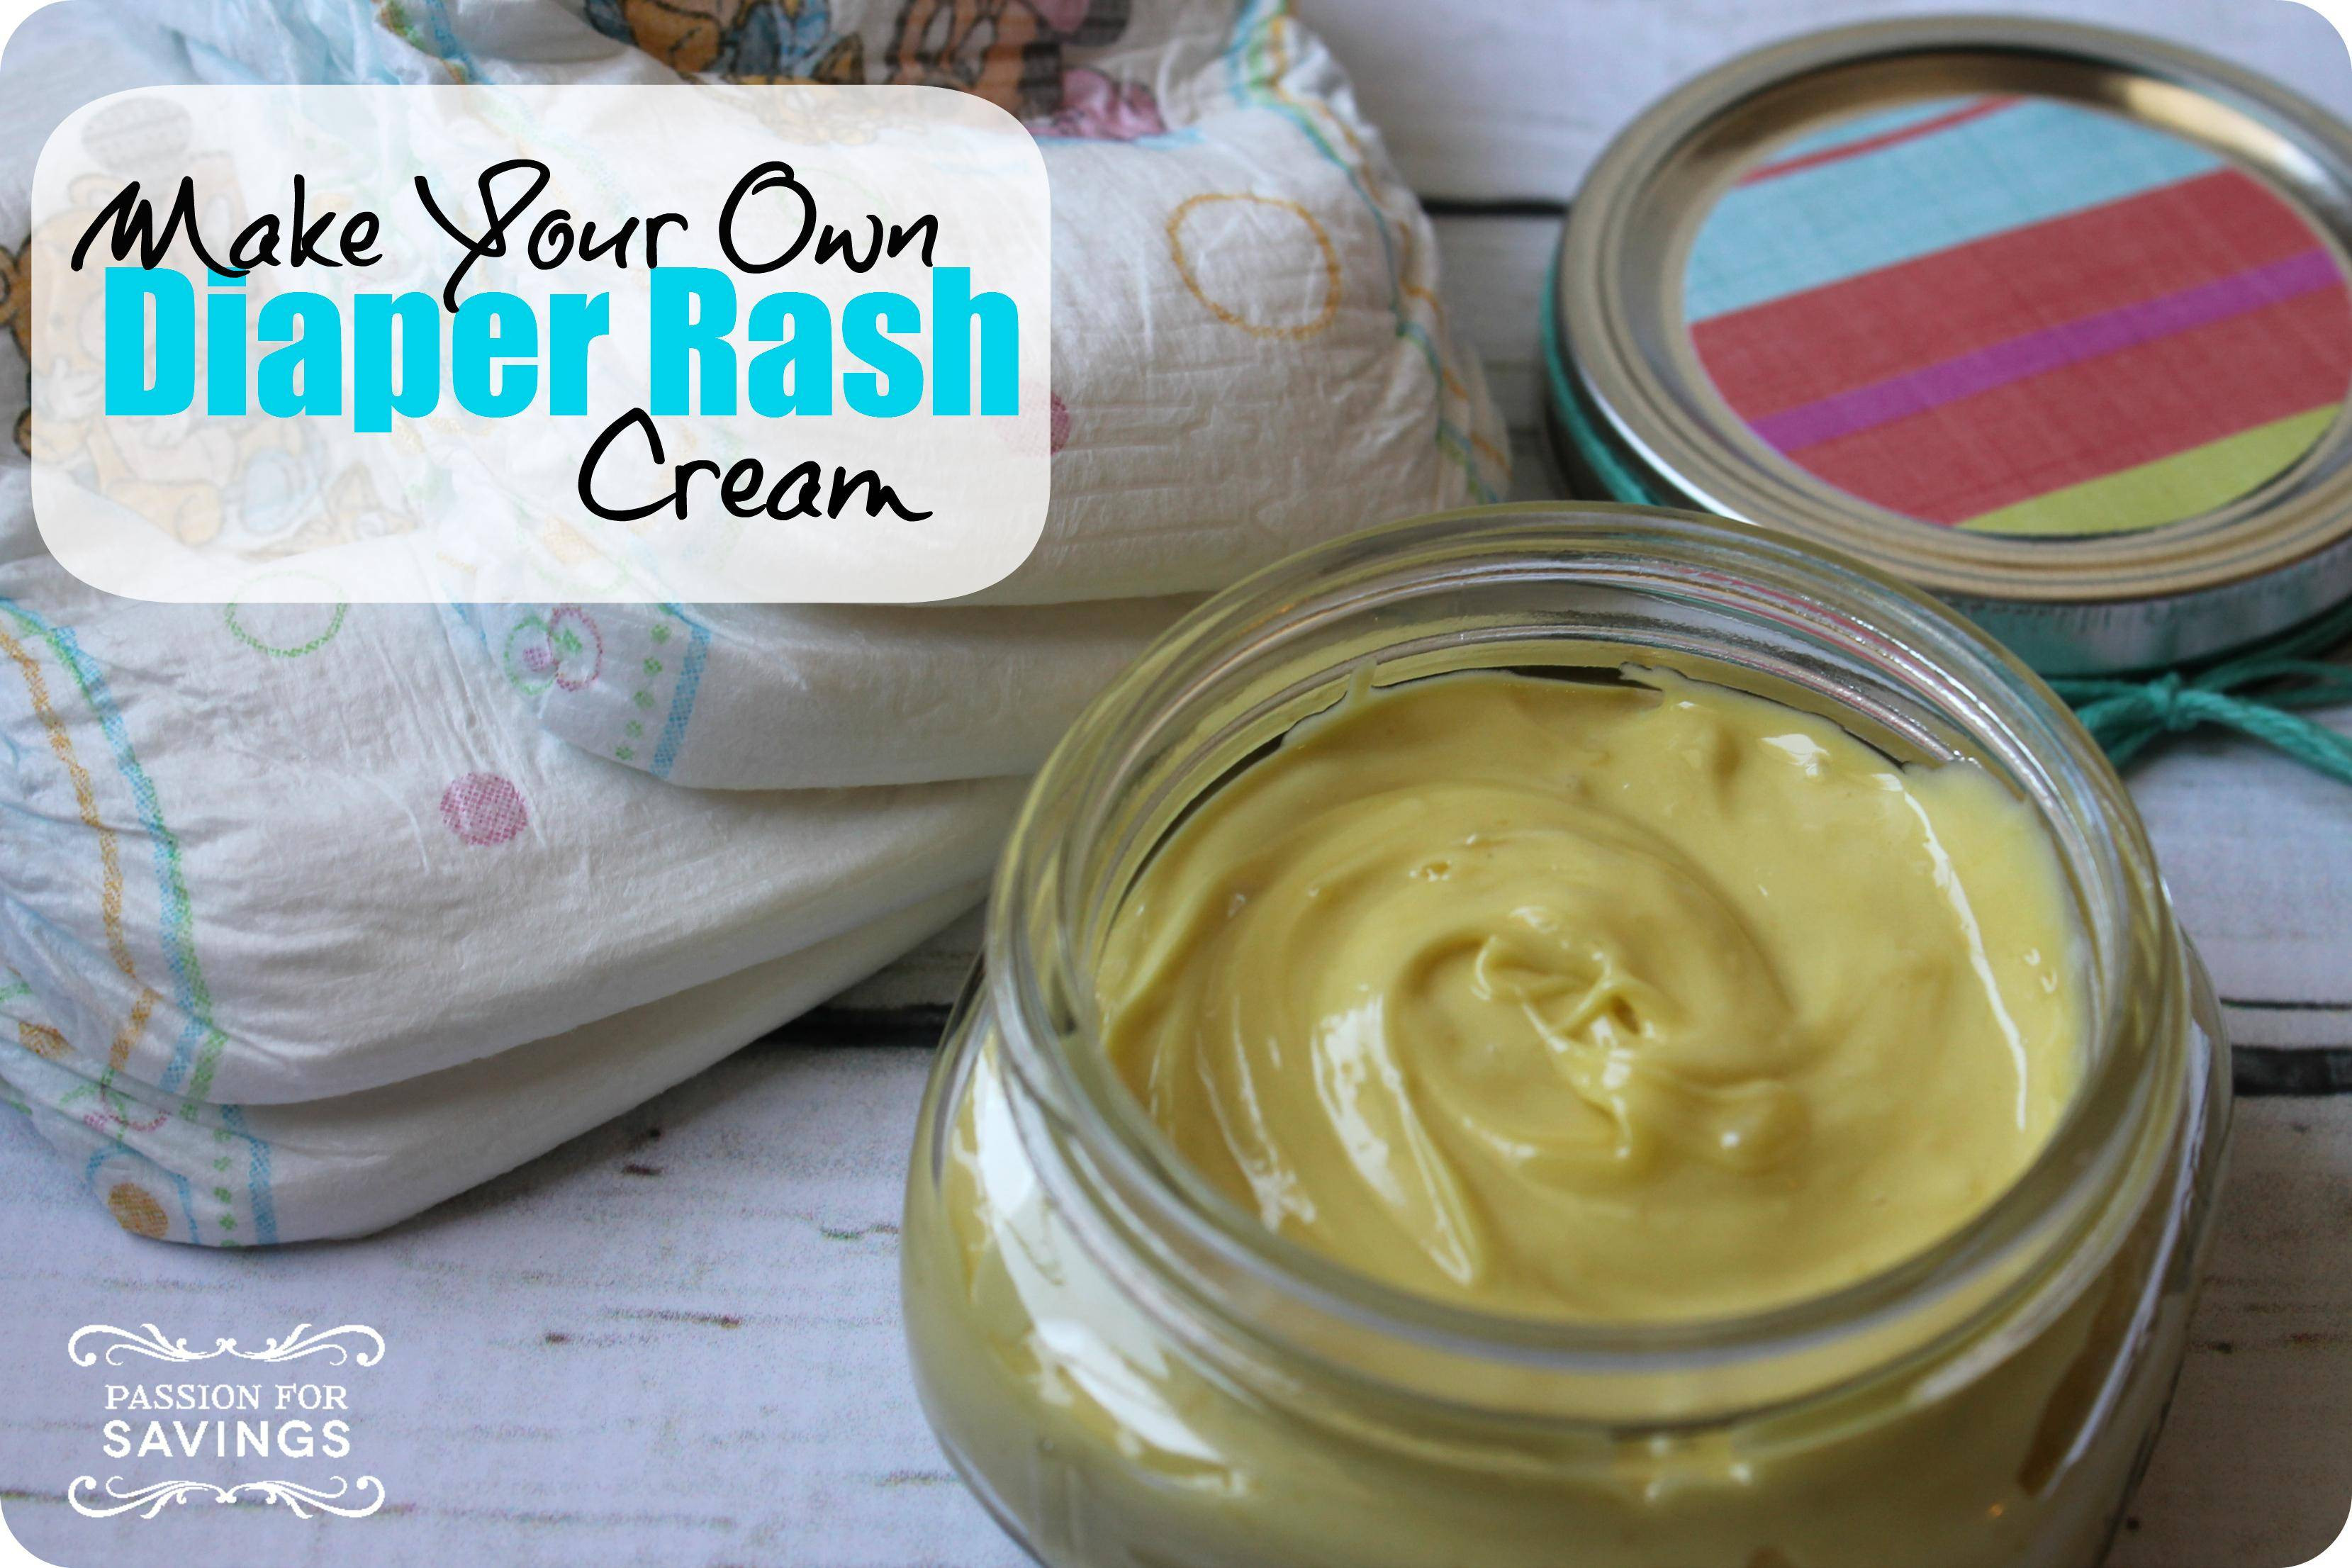 Best ideas about DIY Diaper Rash Cream
. Save or Pin Homemade Diaper Rash Cream Now.